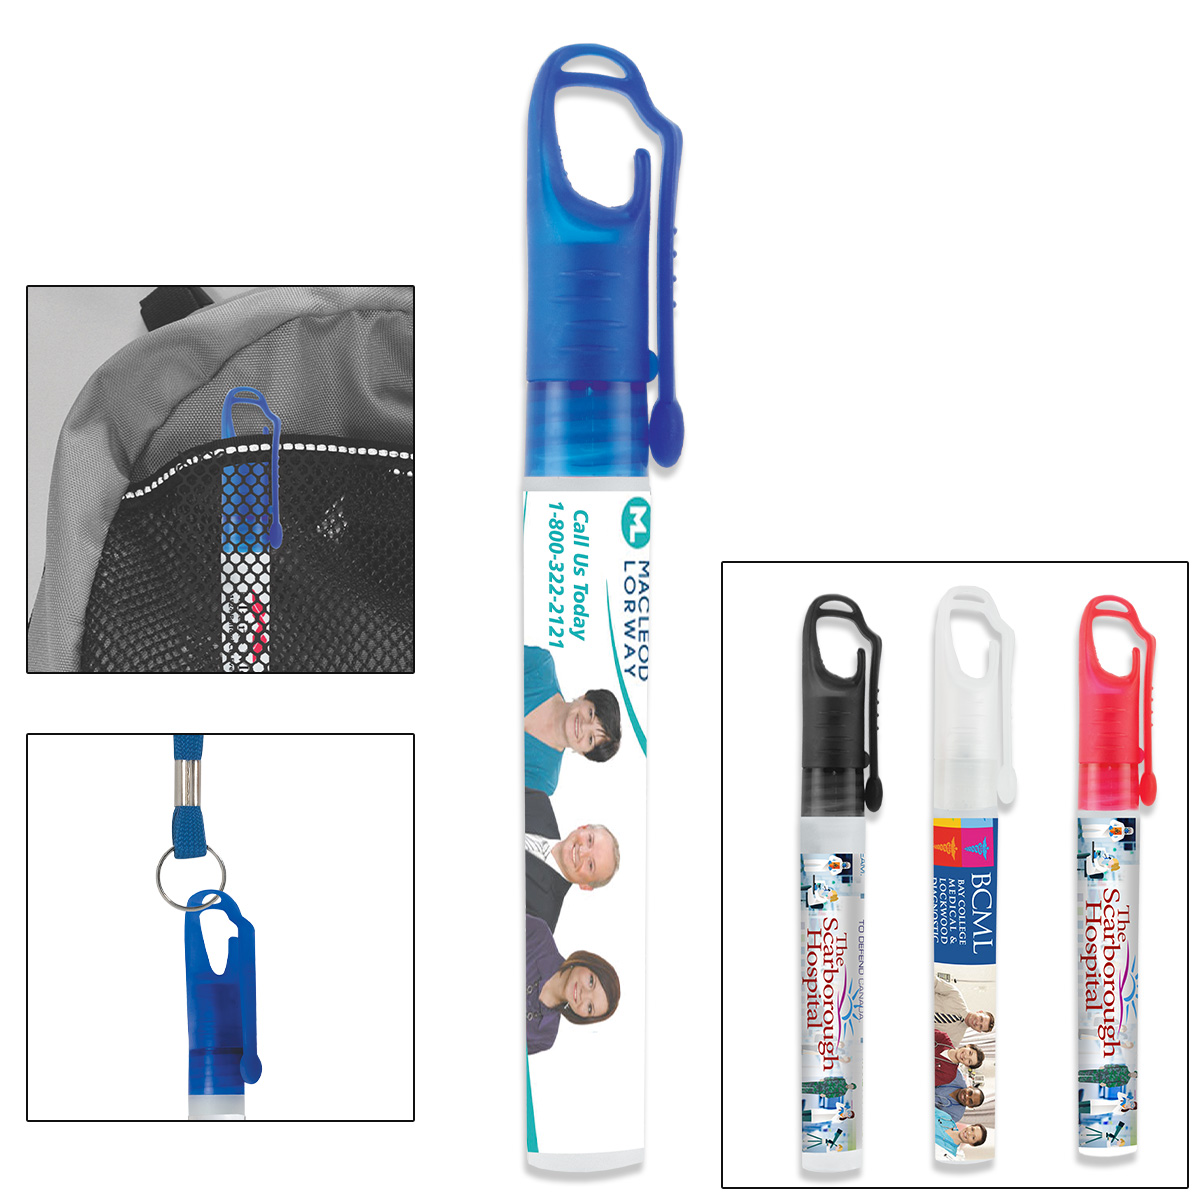 10 ml. Antibacterial Hand Sanitizer Spray Pump Bottle with Carabiner Clip Cap & Lanyard Loop(PhotoImage Full Color)